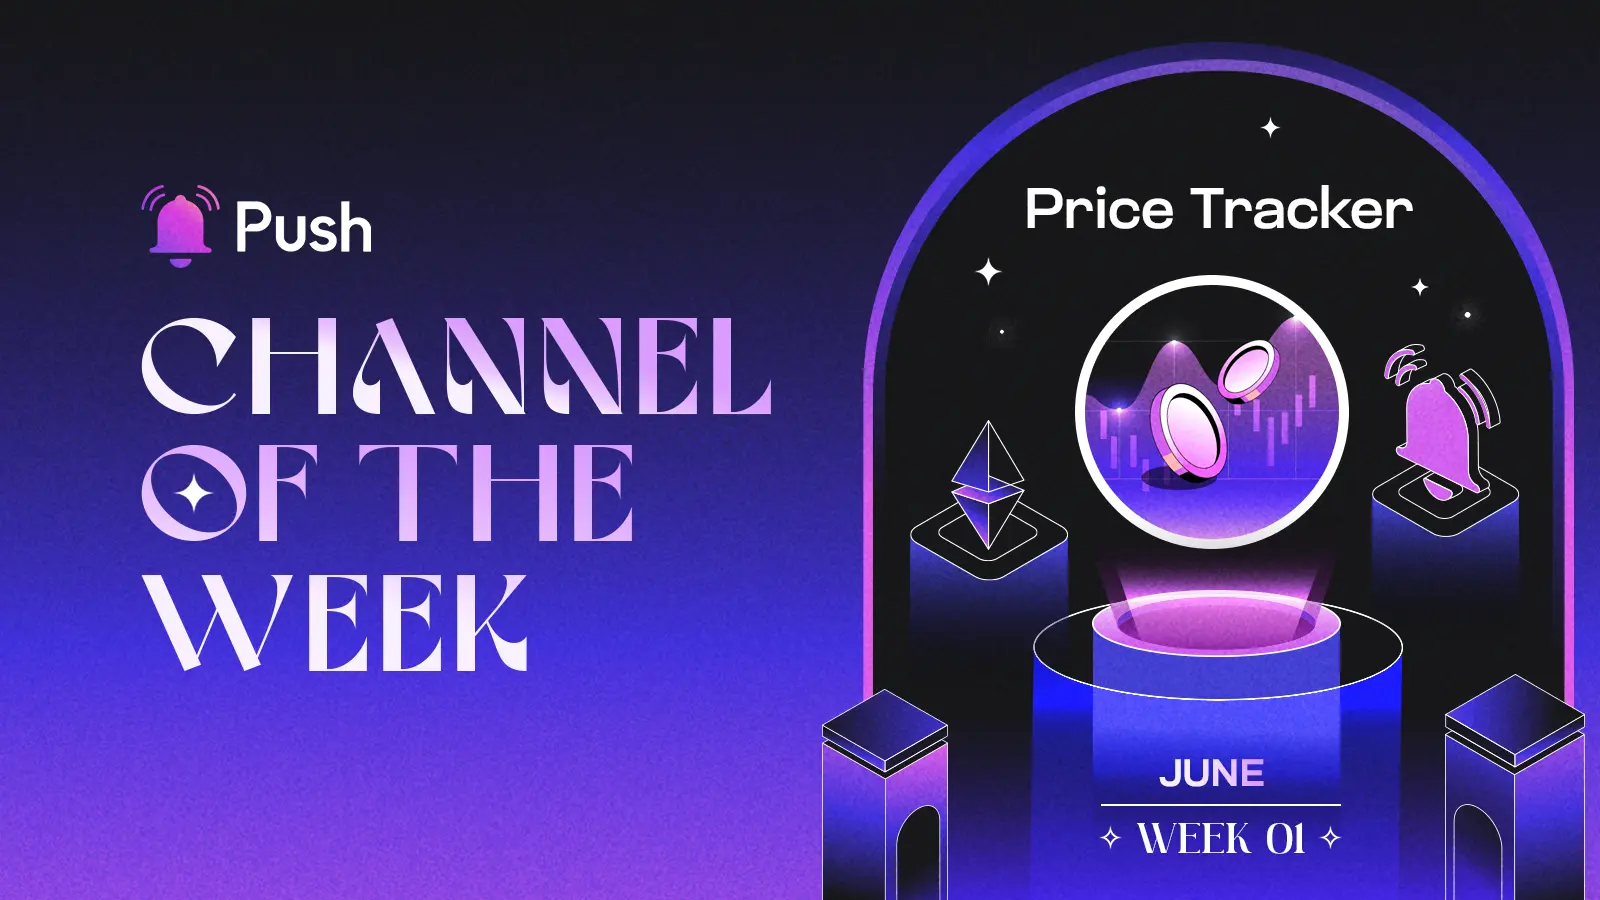 Banner Celebrating Price Tracker as June - week 1 channel of week